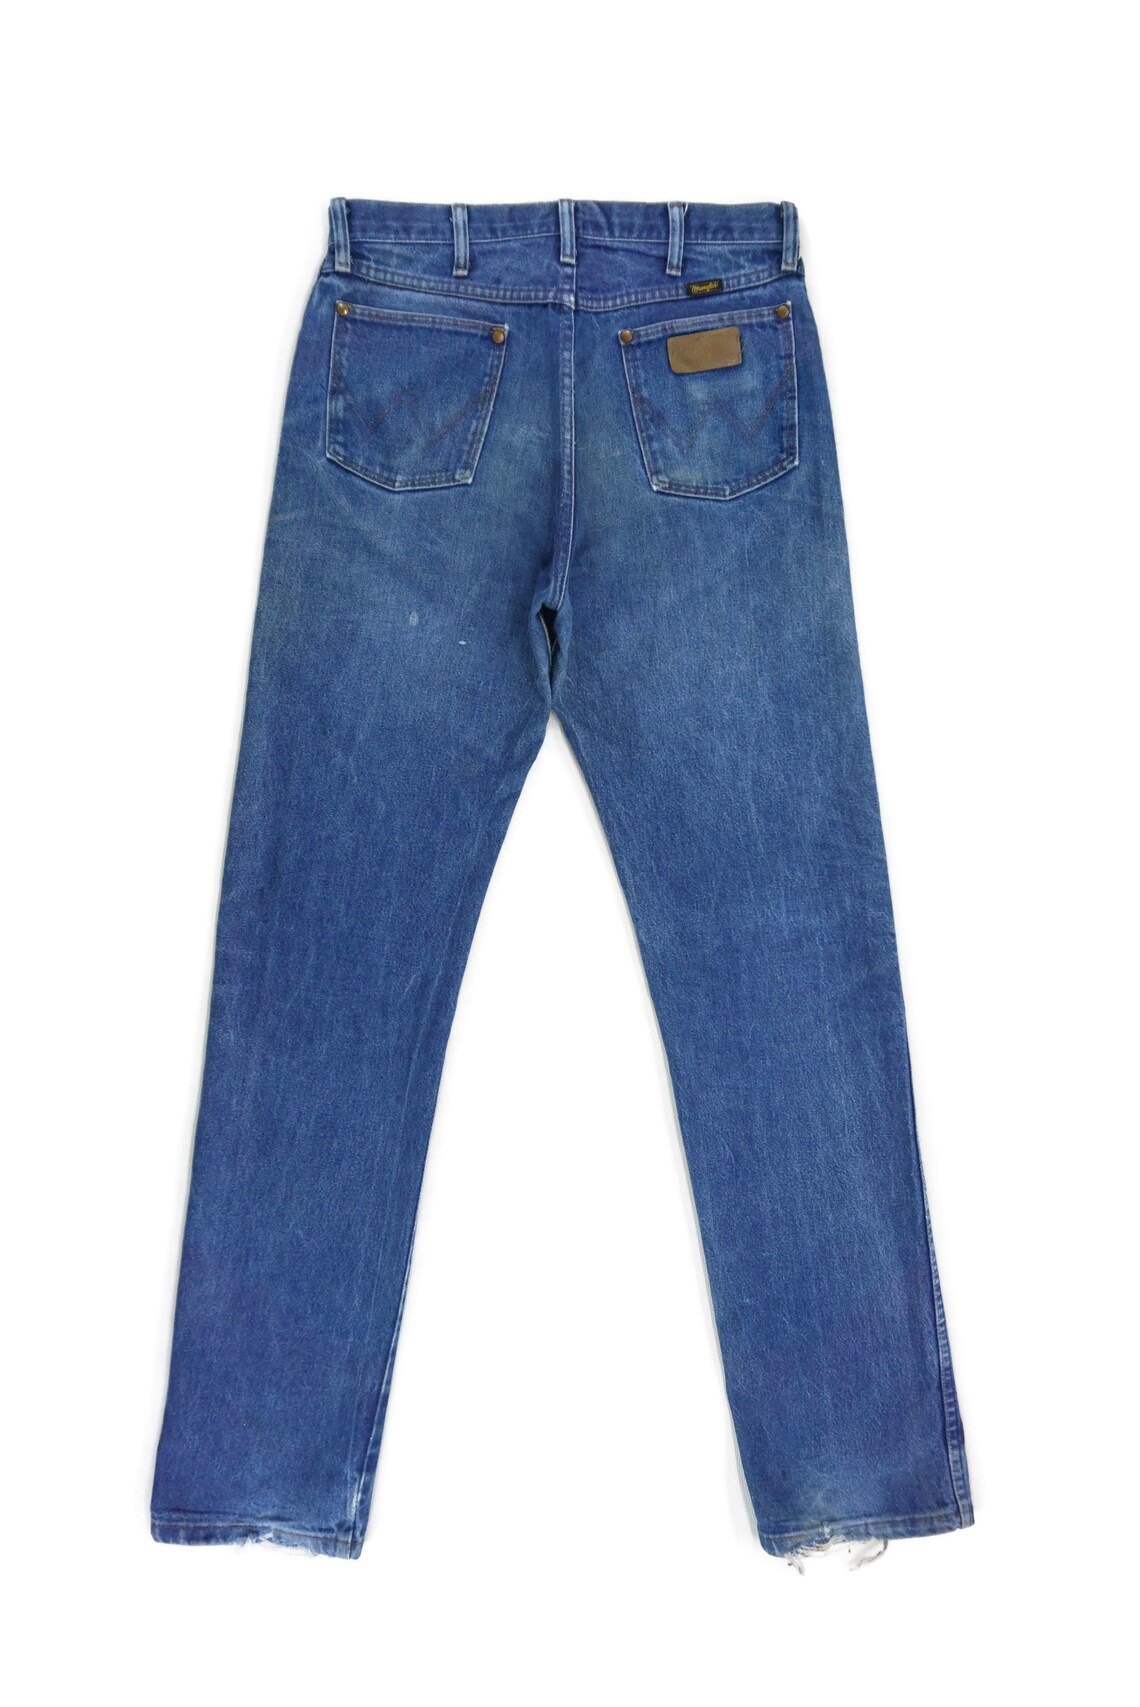 Wrangler Jeans Size 34 W34xL36 Vintage Wrangler 13MWZ Denim | Etsy